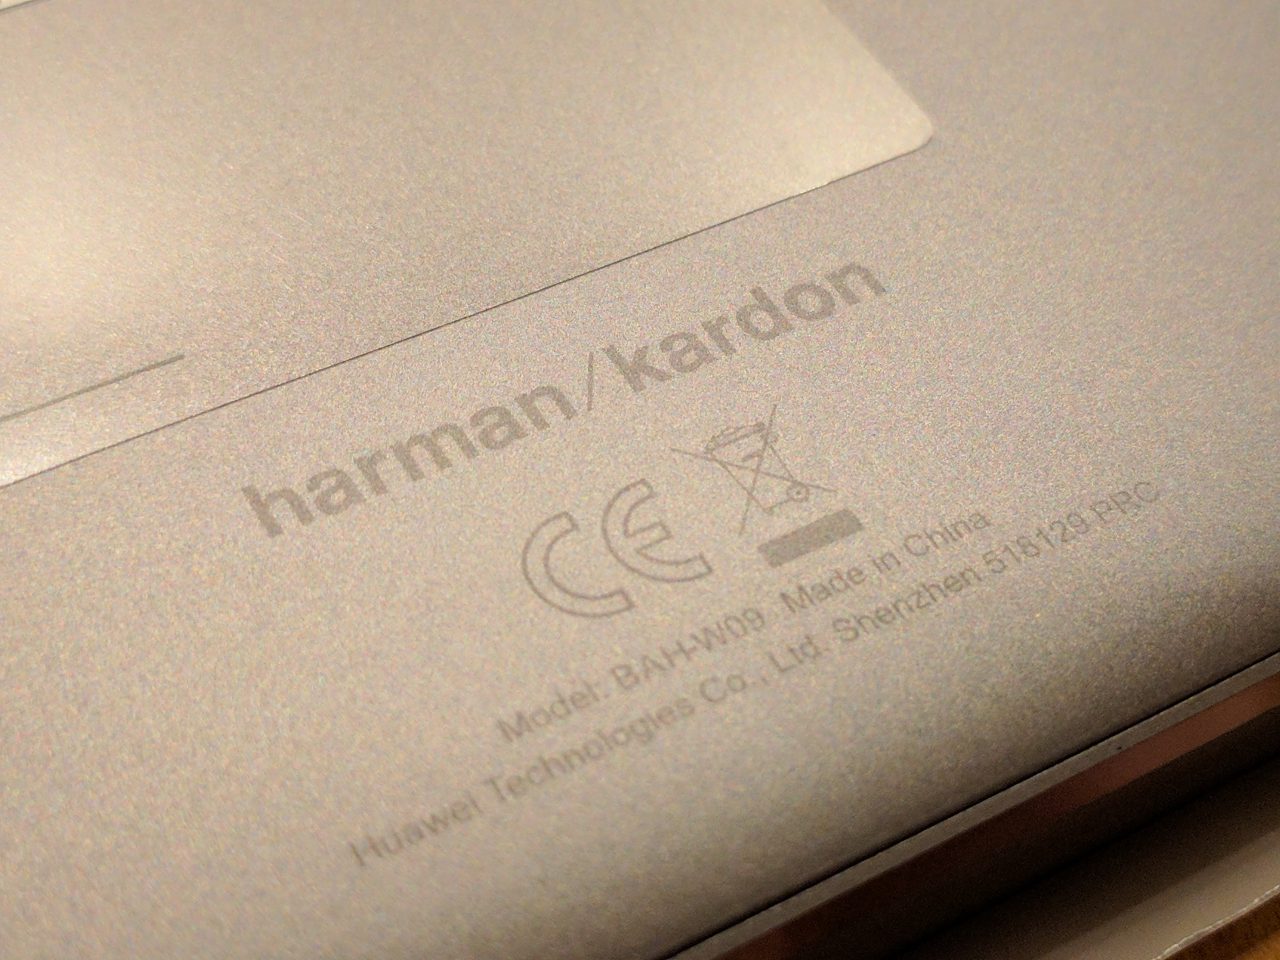 harman/kardon logo and model no